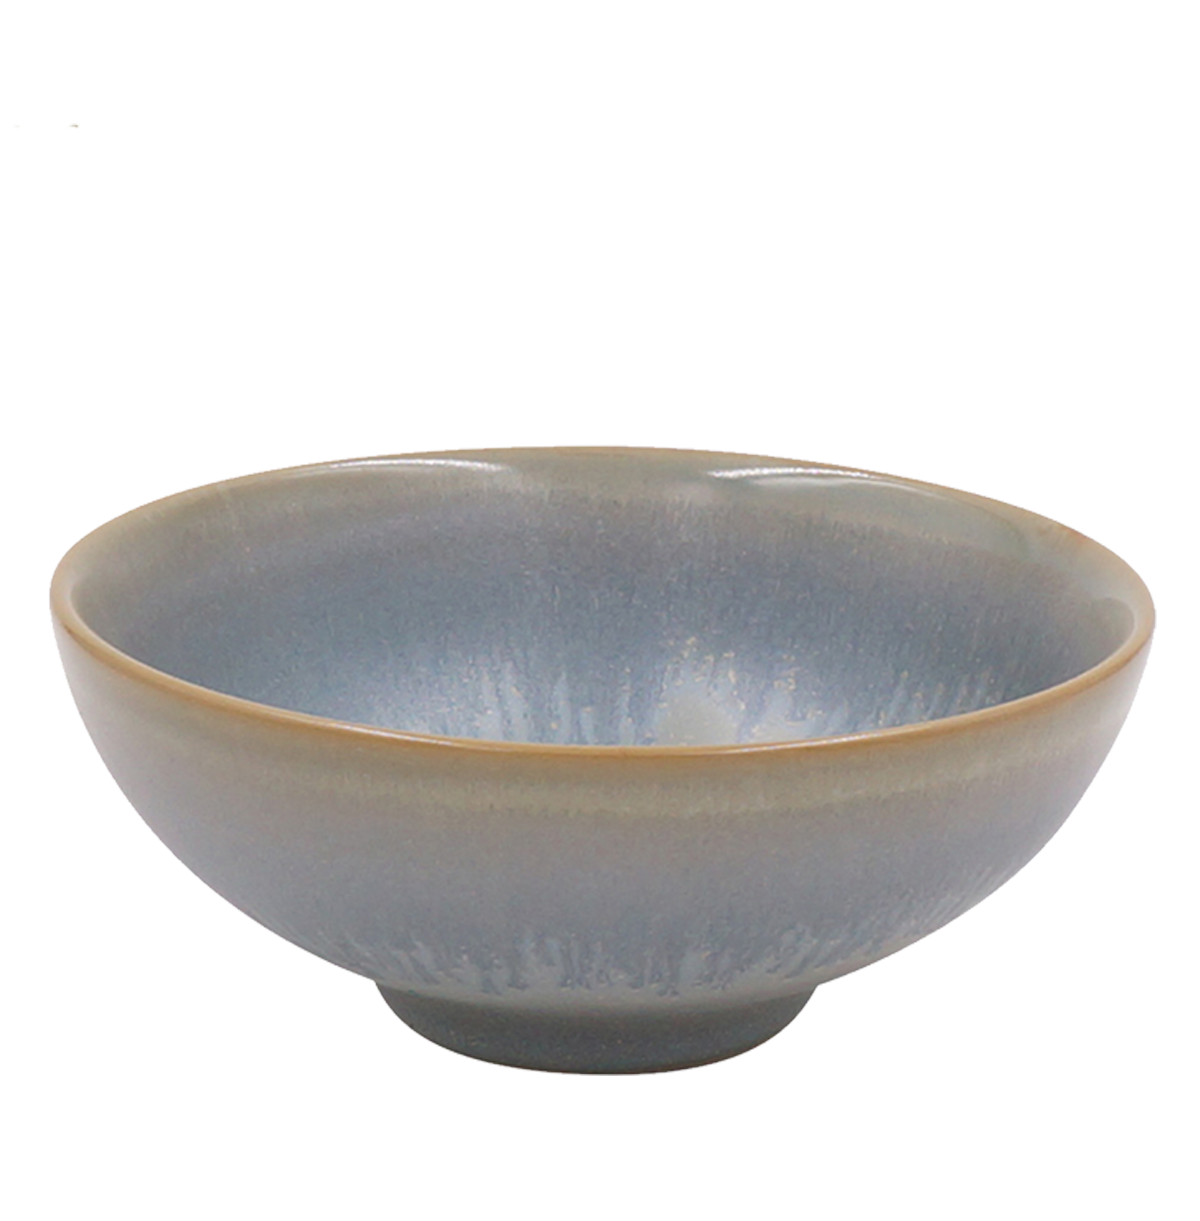 moon rice bowl